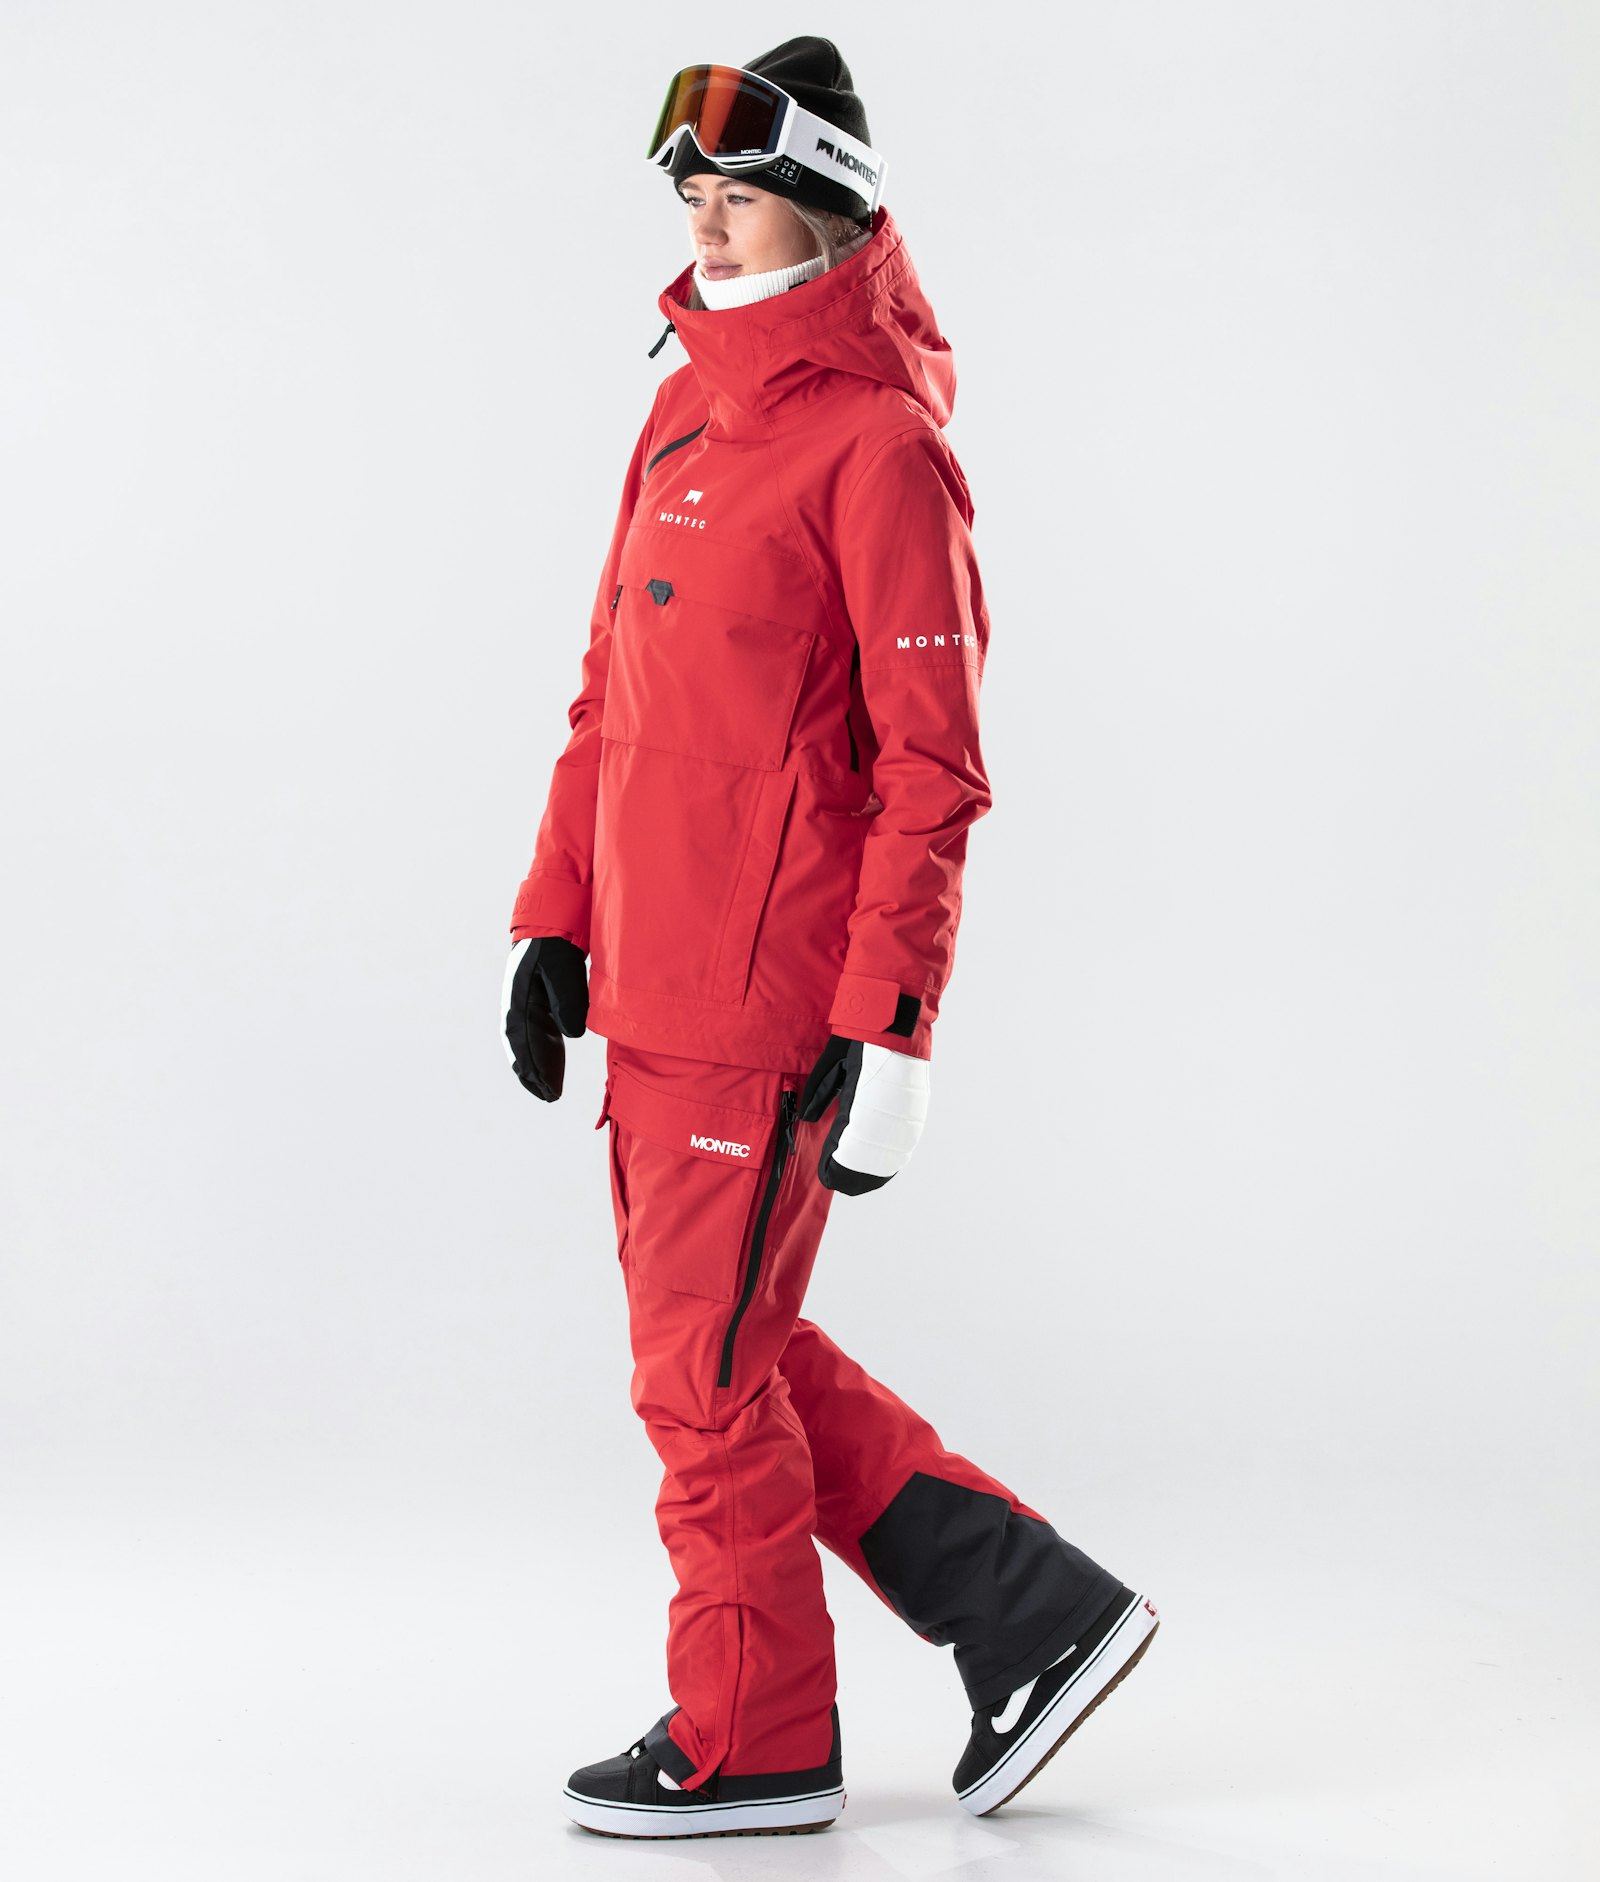 Dune W 2020 Veste Snowboard Femme Red